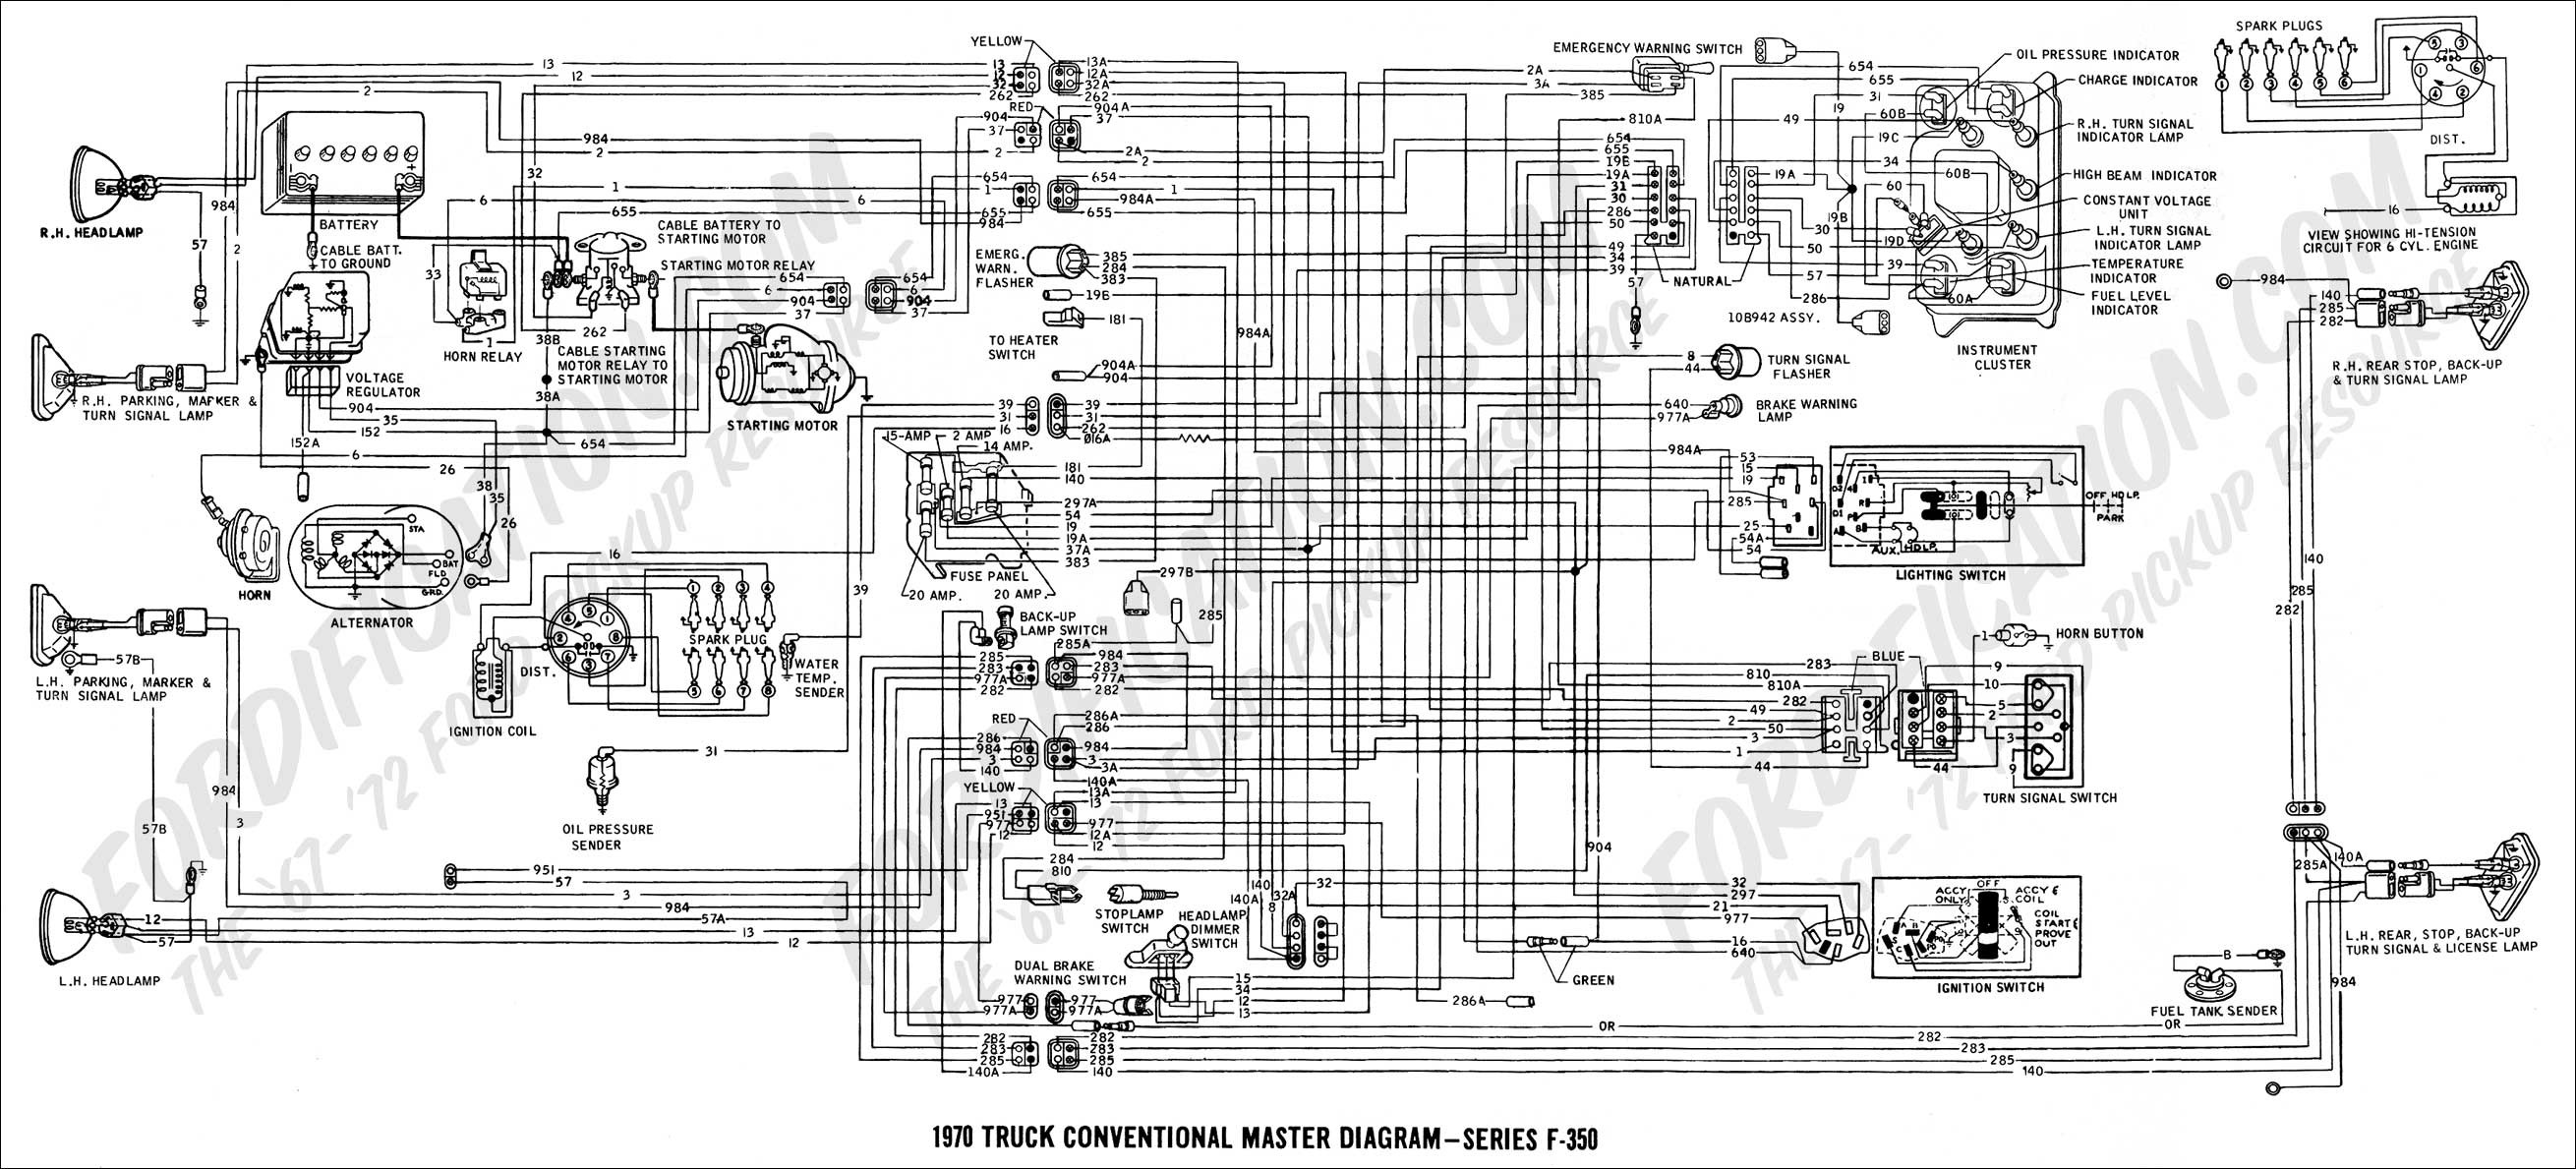 1986 toyota Pickup Wiring Diagram ford F350 Wiring Diagram About Wiring • Gatbook Of 1986 toyota Pickup Wiring Diagram